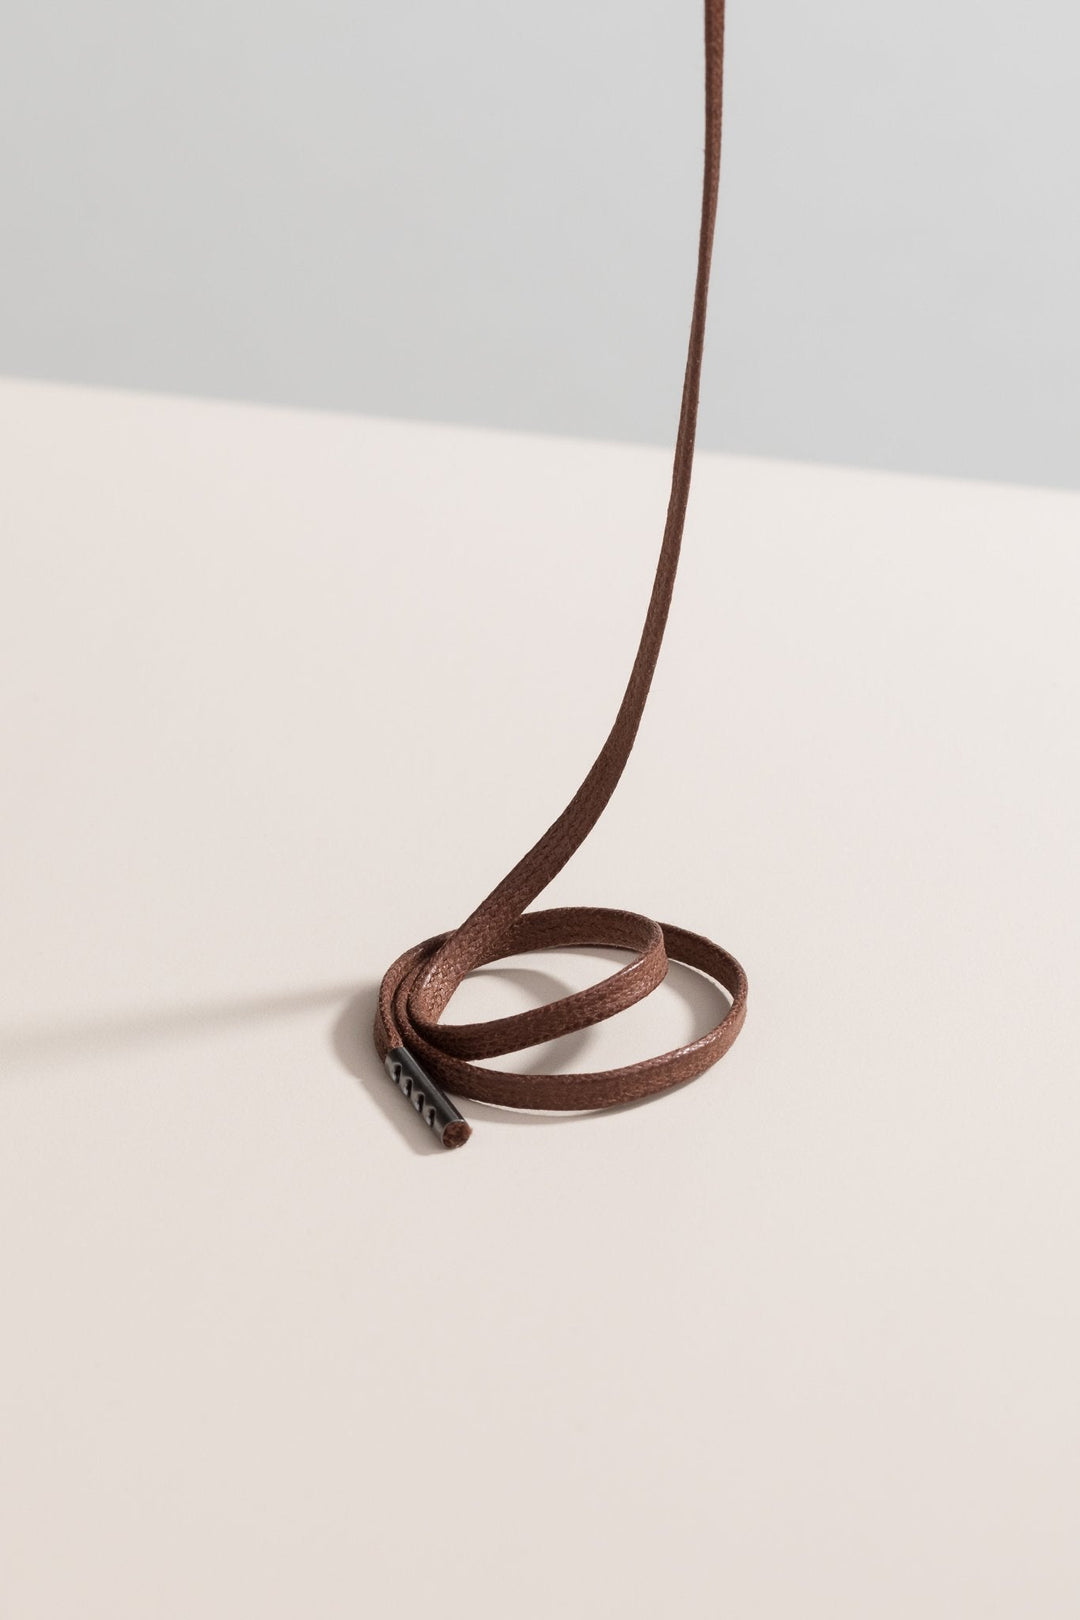 Medium Brown - 3mm Flat Waxed Shoelaces